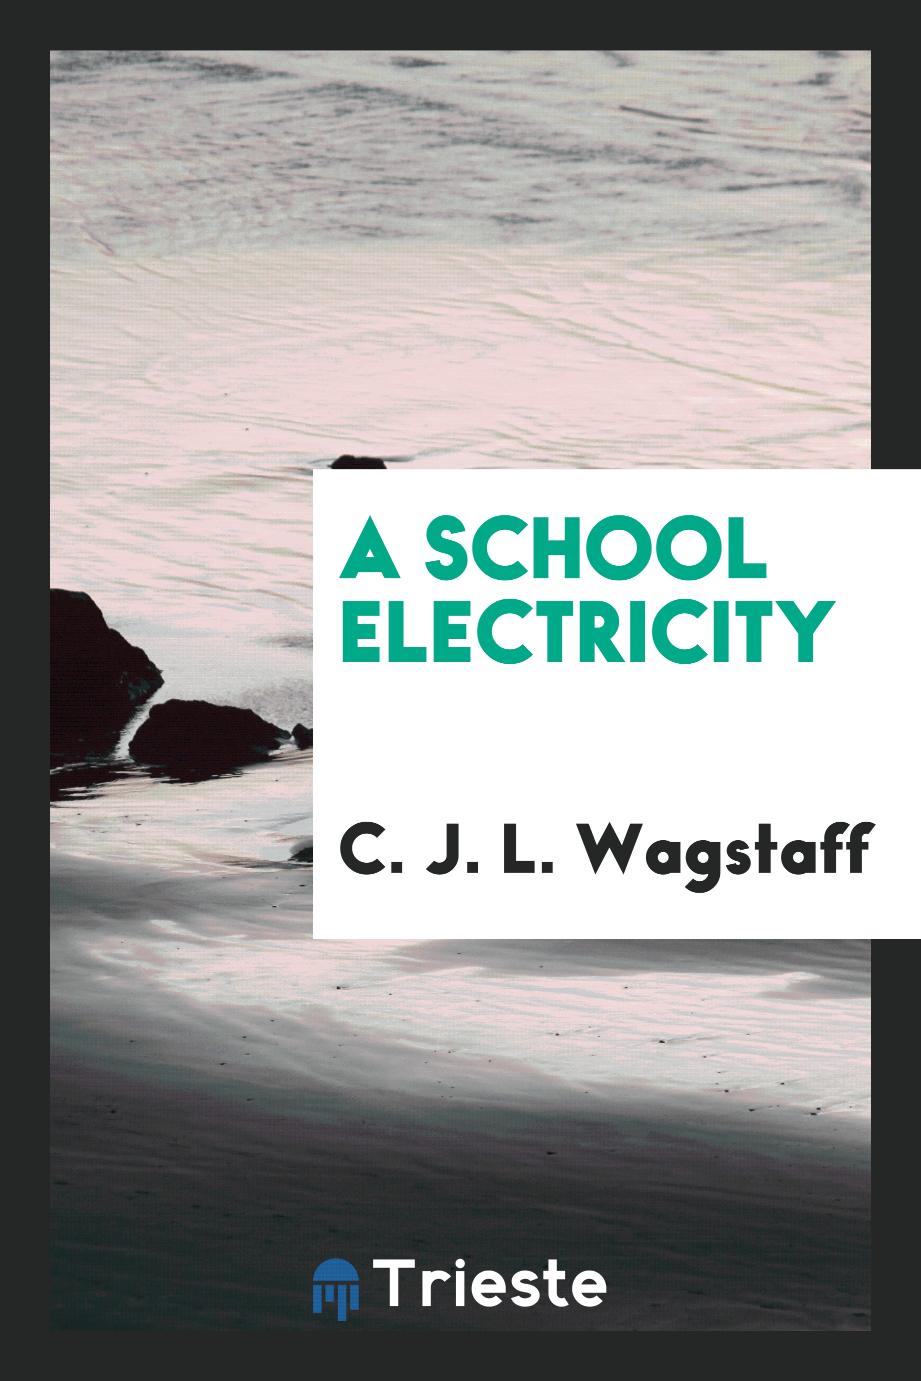 A school electricity